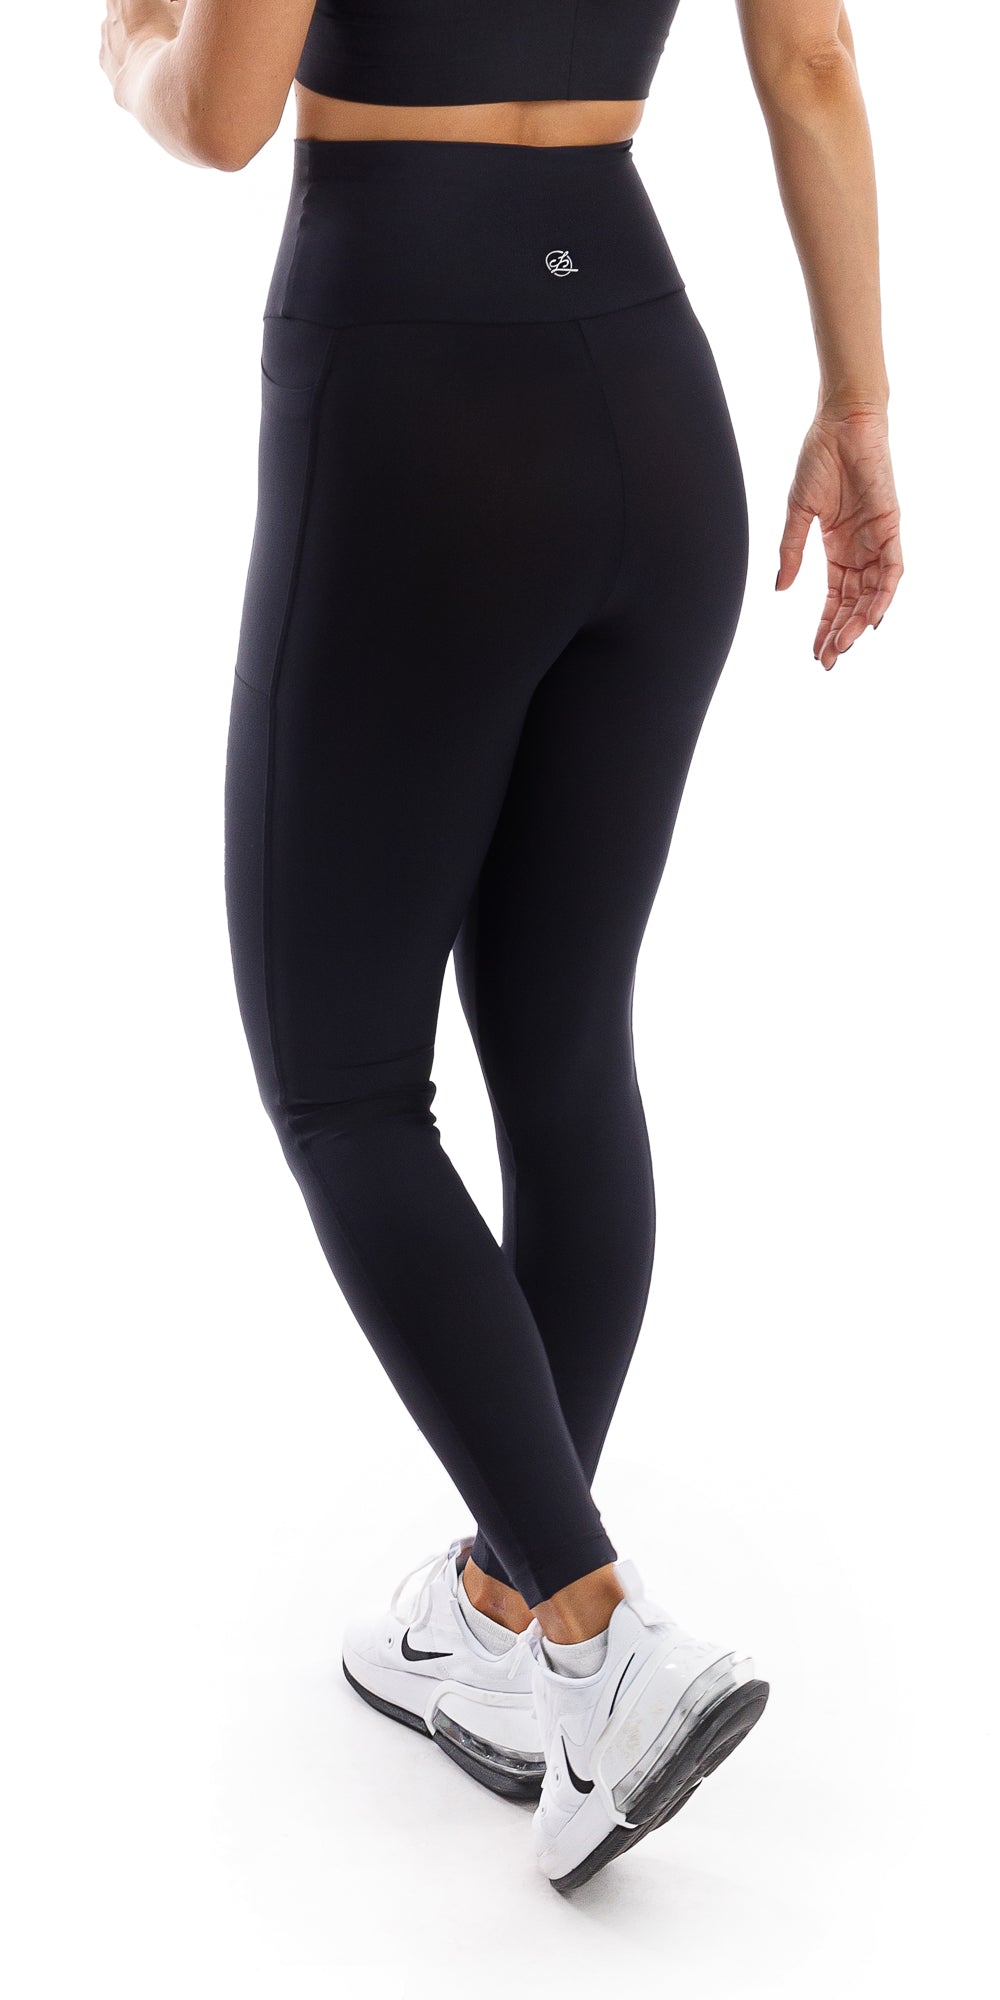 CHRLEISURE Pocket Yoga Pants High Waist Elastic Fitness Leggings